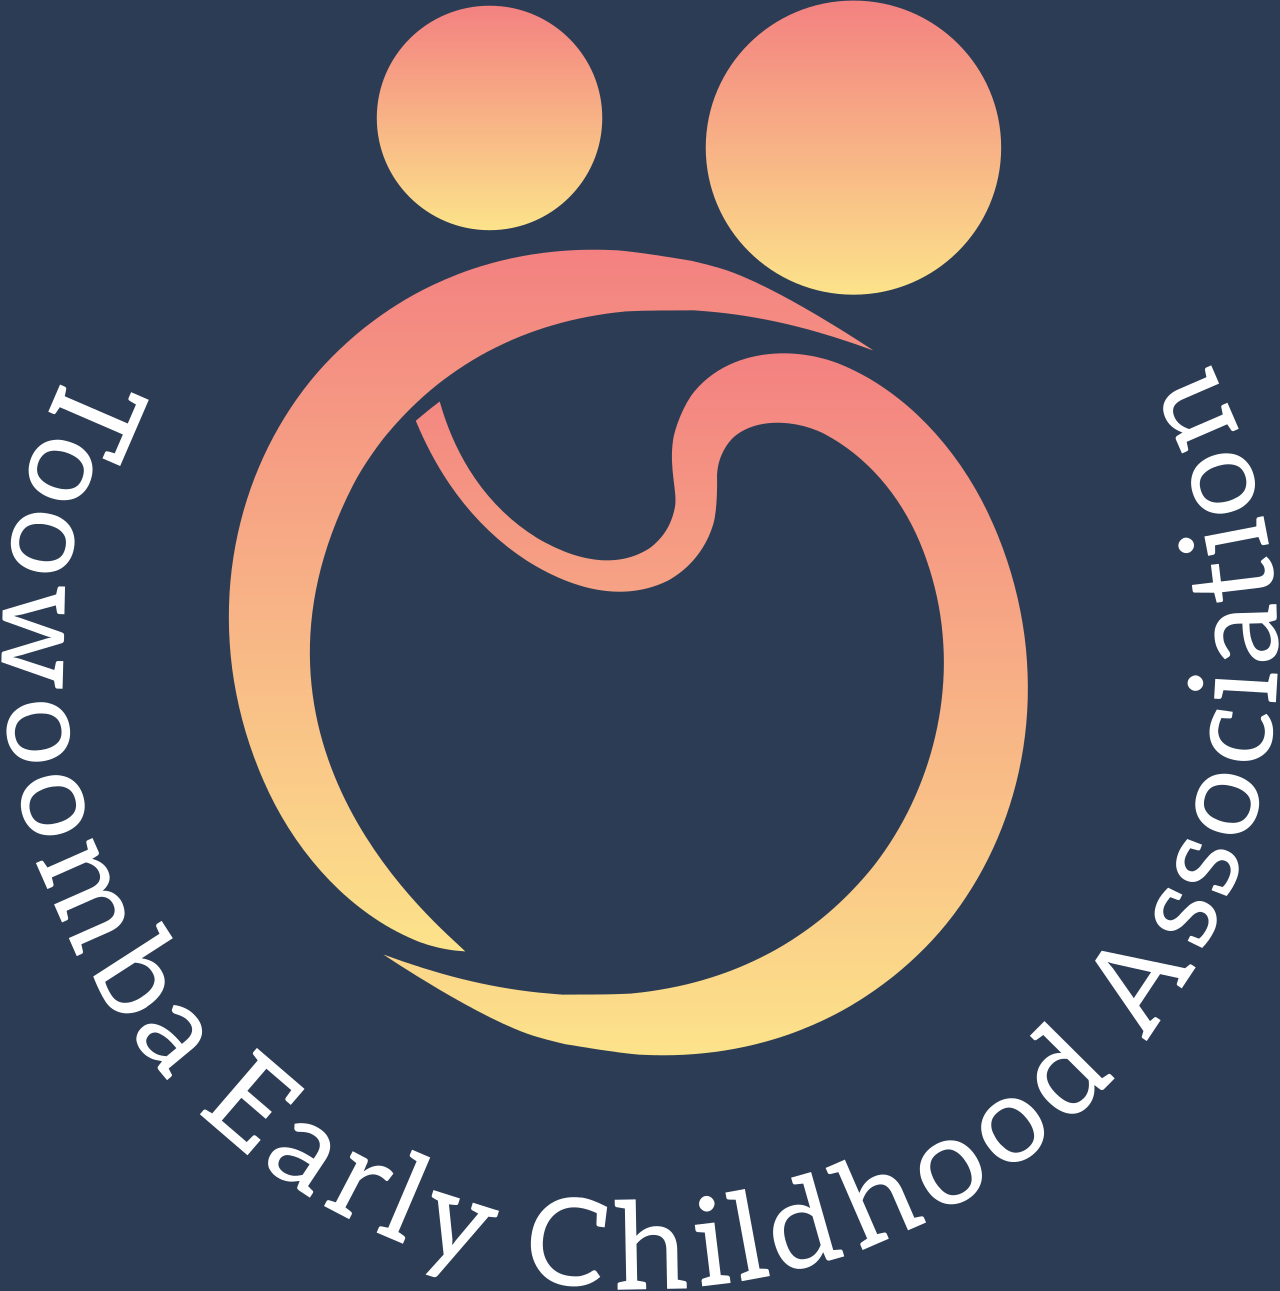 Toowoomba Early Childhood Association's logo